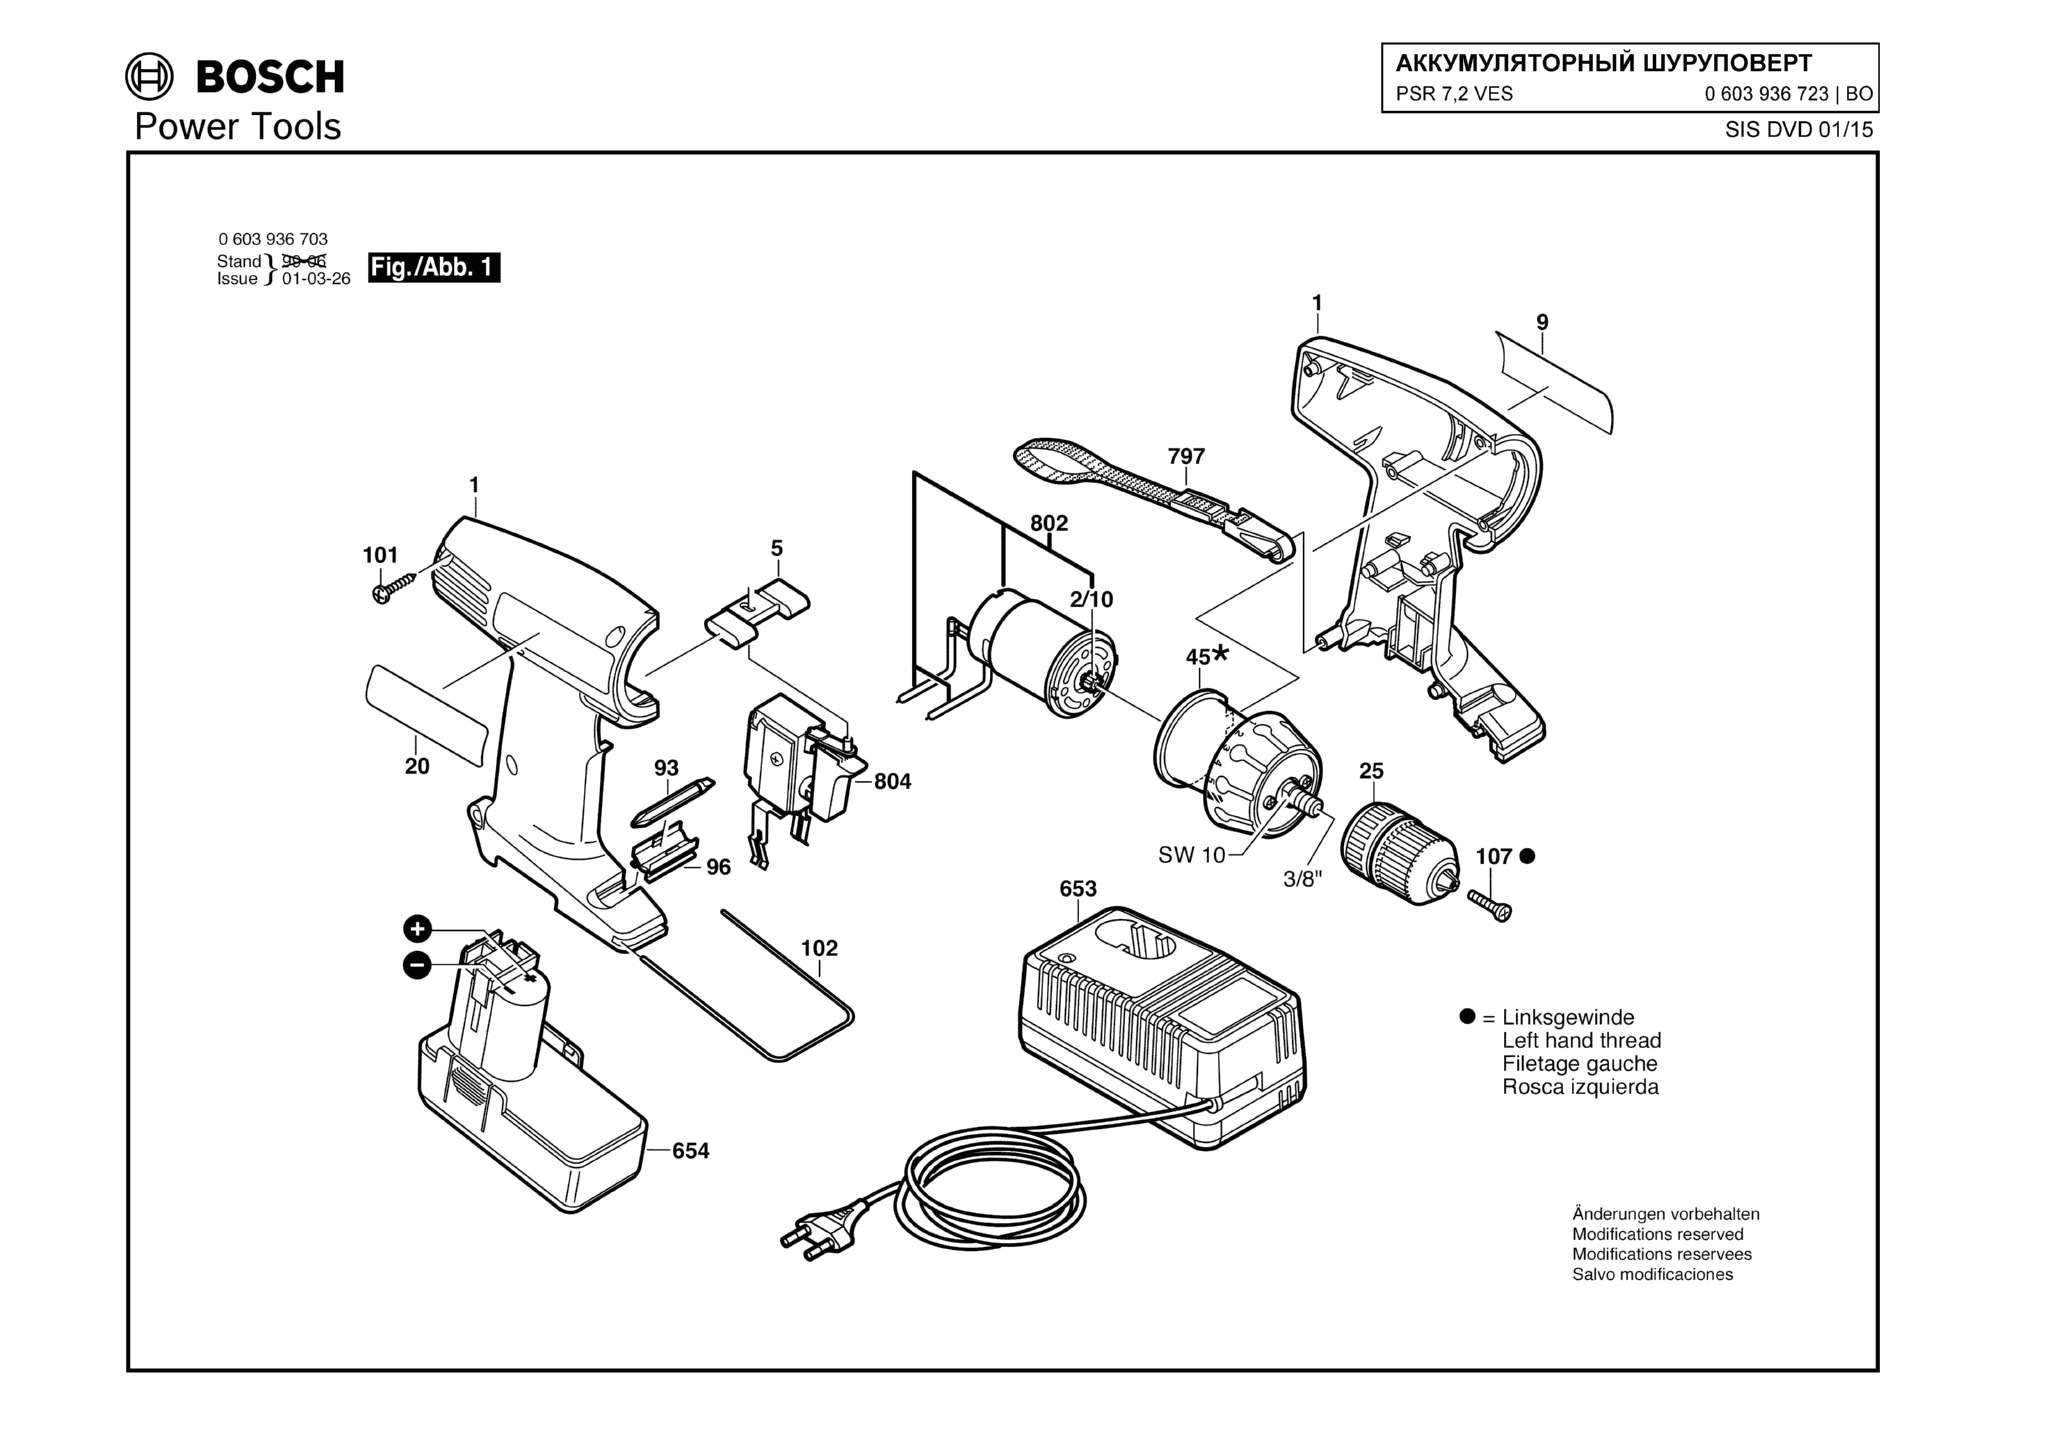 Запчасти, схема и деталировка Bosch PSR 7,2 VES (ТИП 0603936723)